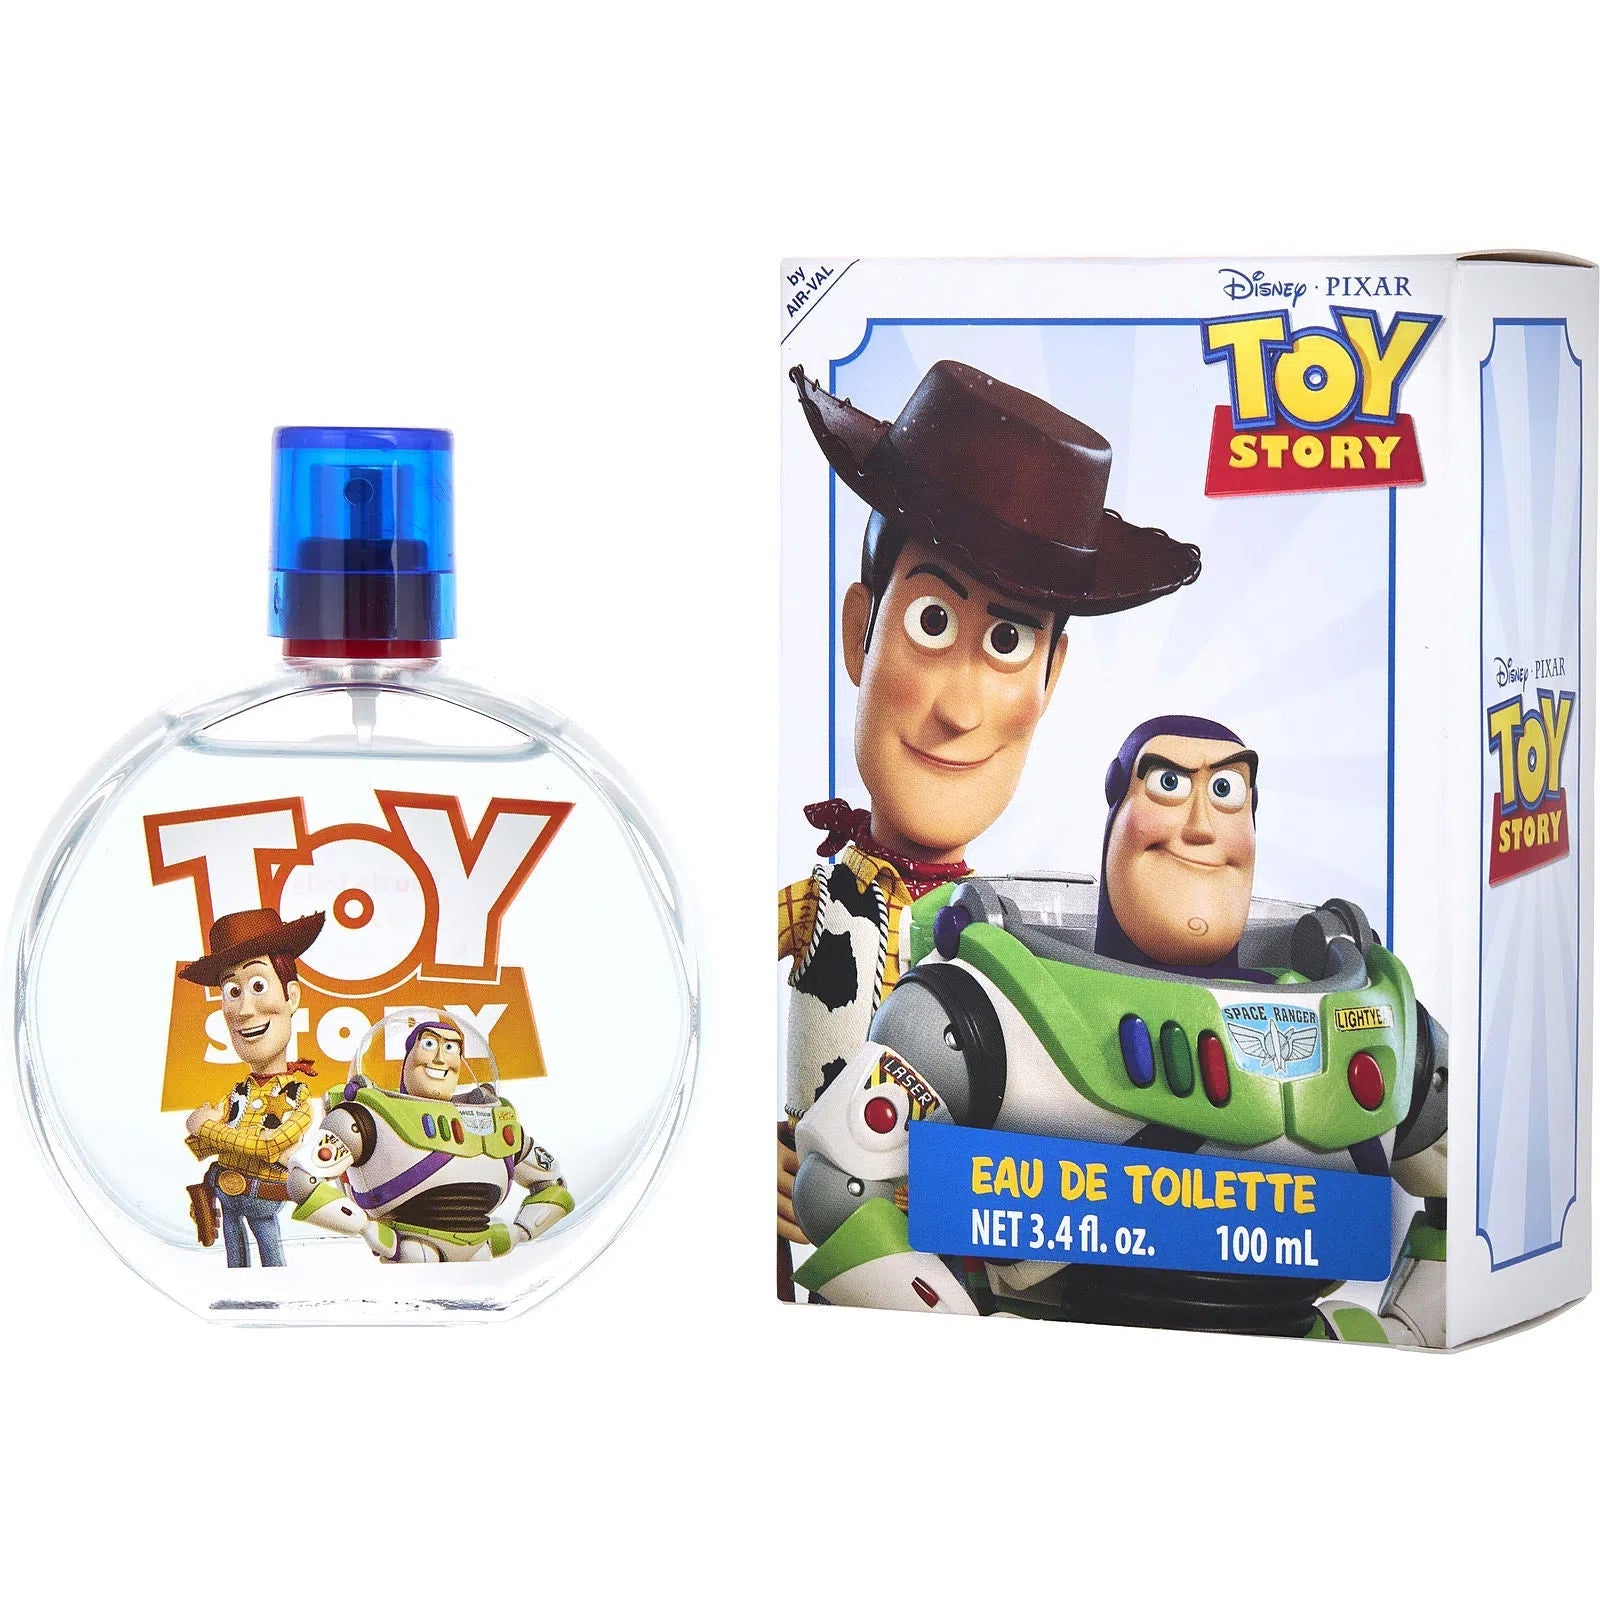  Disney Toy Story EDT (B) / 100 ml - 663350092790- Prive Perfumes Honduras